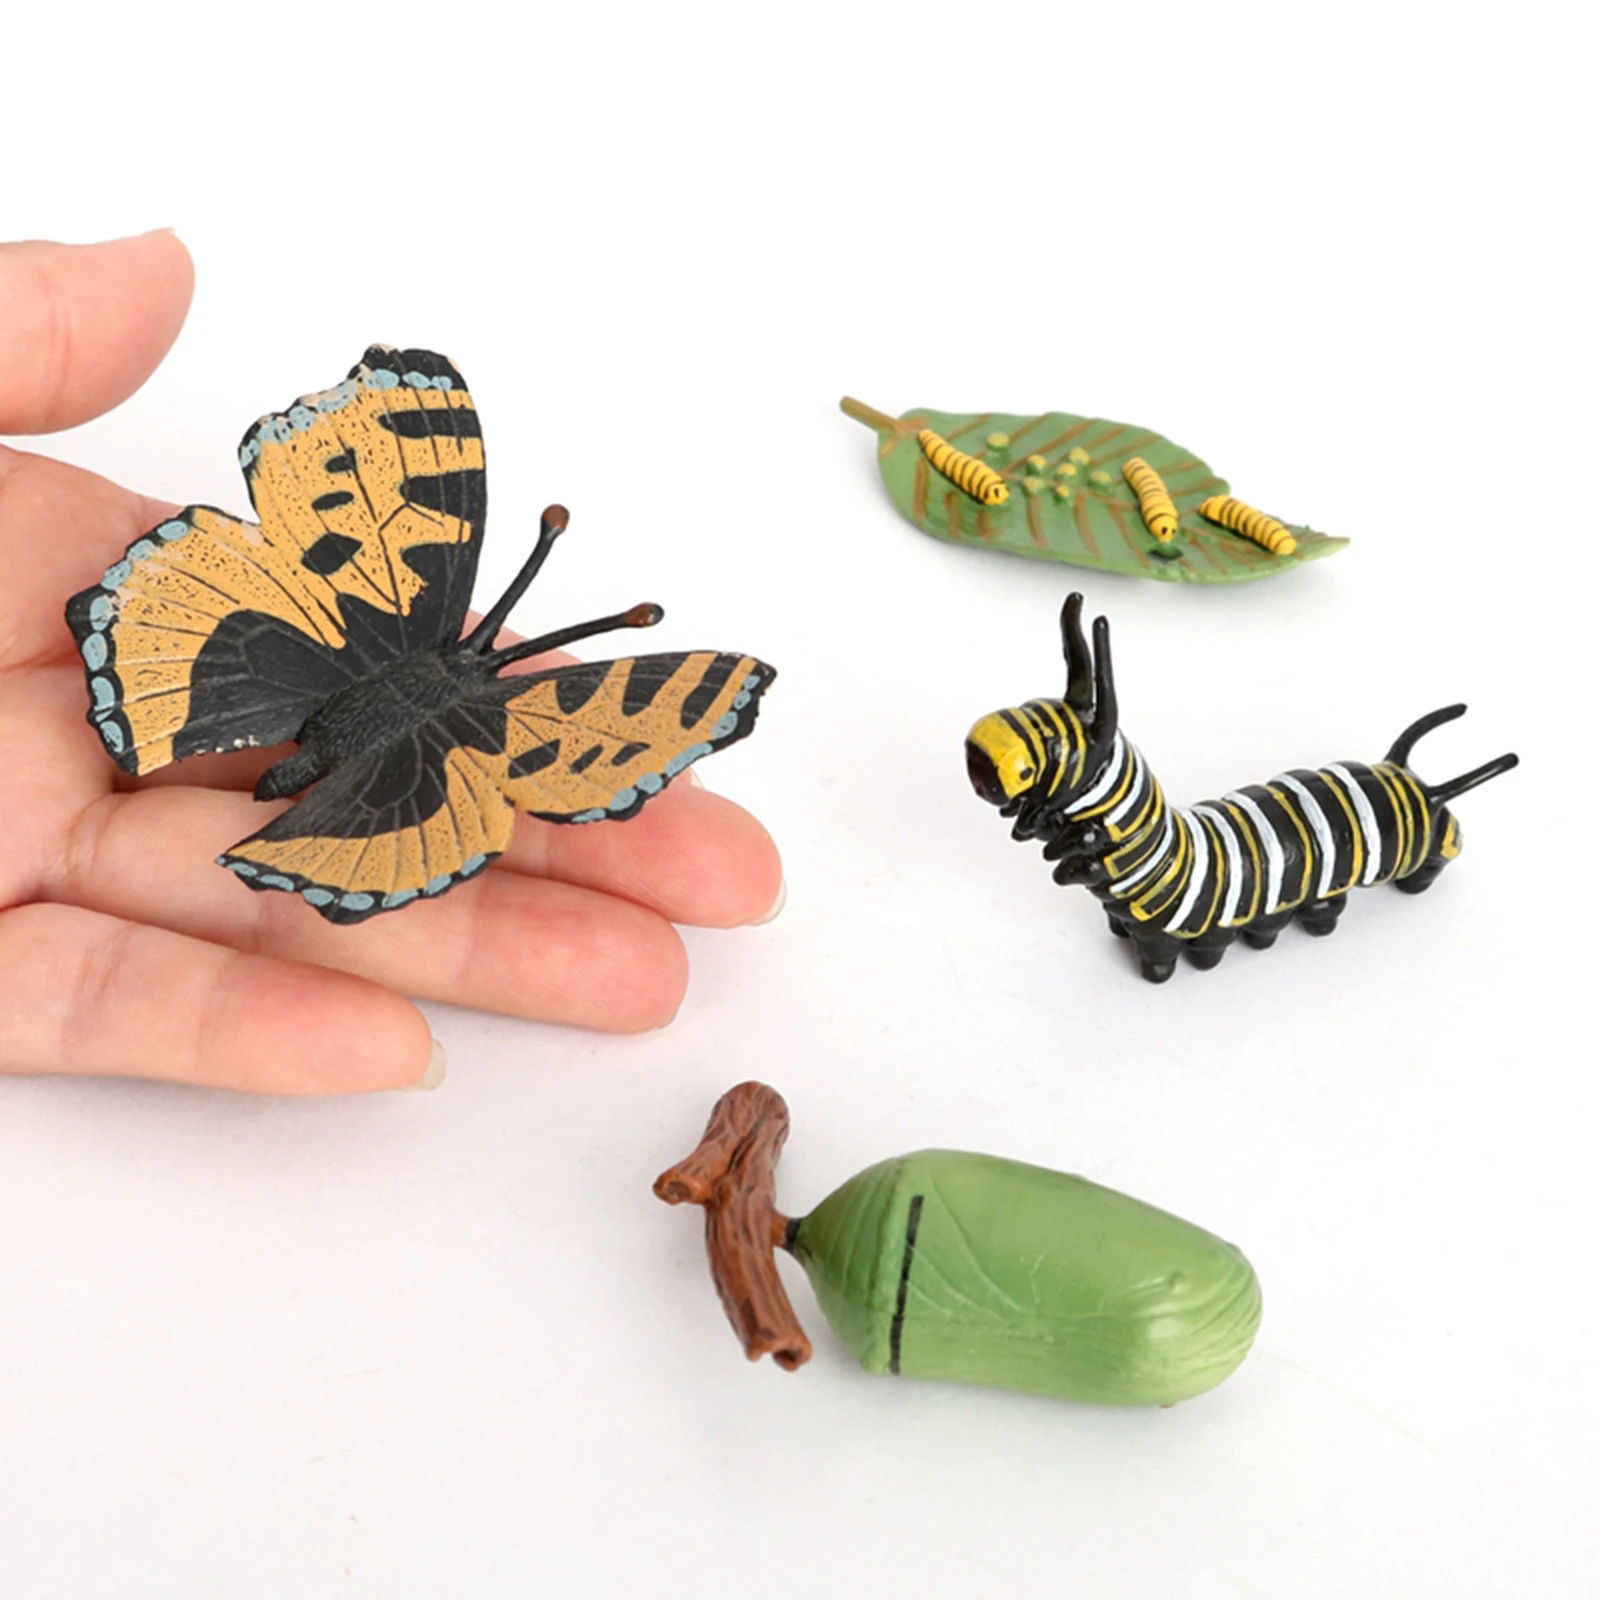 Temprana pedagógica desarrollo preescolar juguetes Bee ciclo de vida útil 